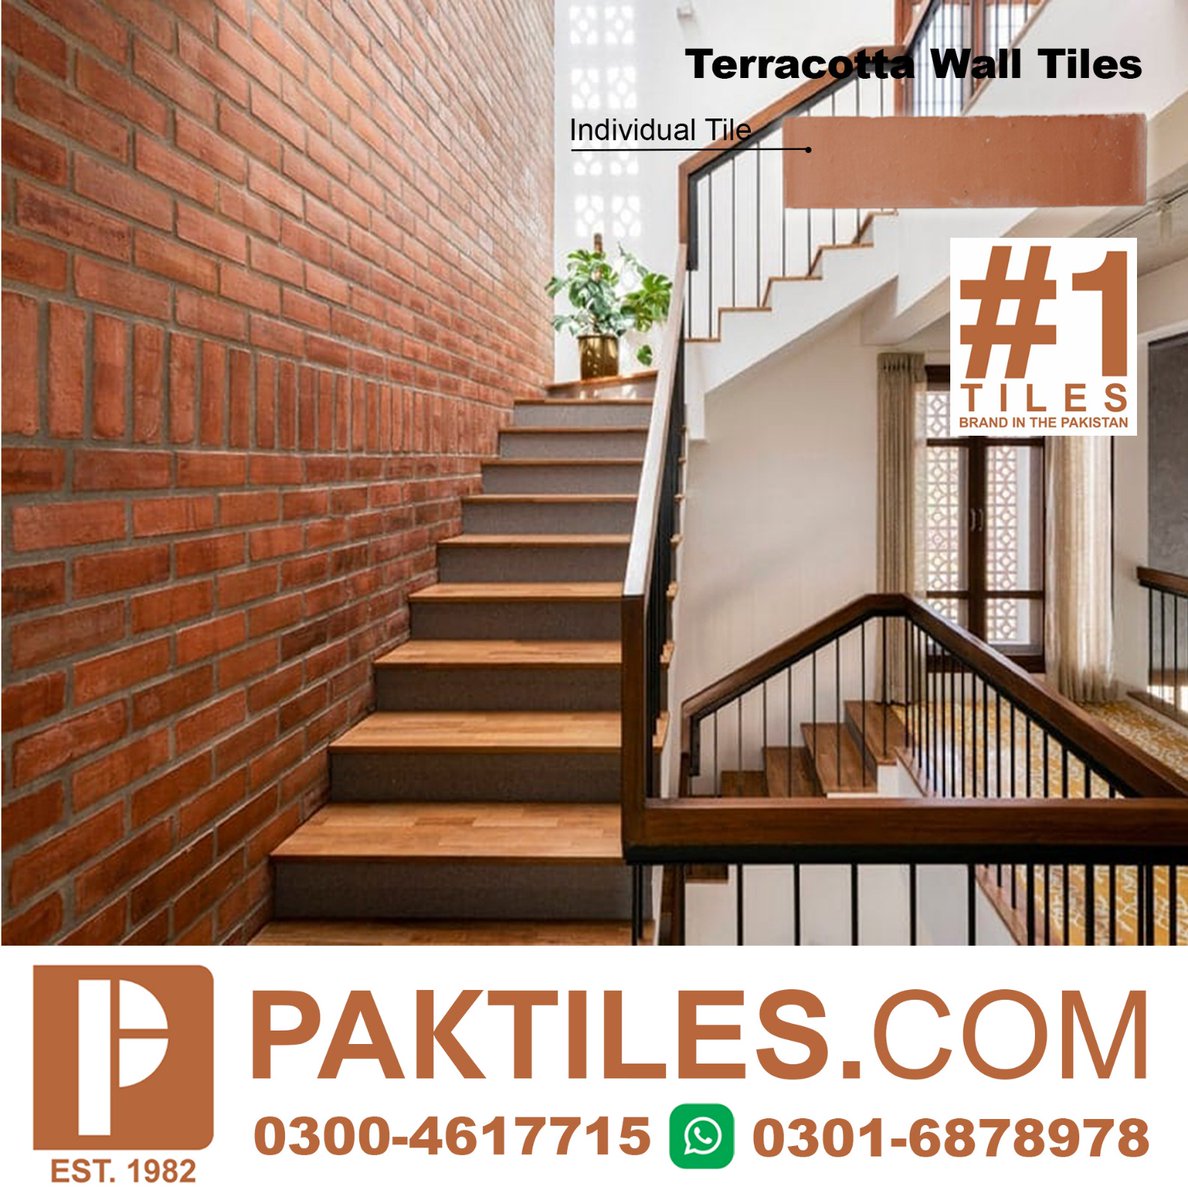 Khaprail Tiles Manufacturer. Terracotta Wall Tiles #khaprailtiles #khaprailtile #khaprail #paktiles #paktile #pakclay #pakclaytiles #naturalclaytiles #naturalclayindustry #walltiles #tiles #homedecor #homedecoration #terracottatiles #claytiles #handmadetiles #leaked #viral #tile